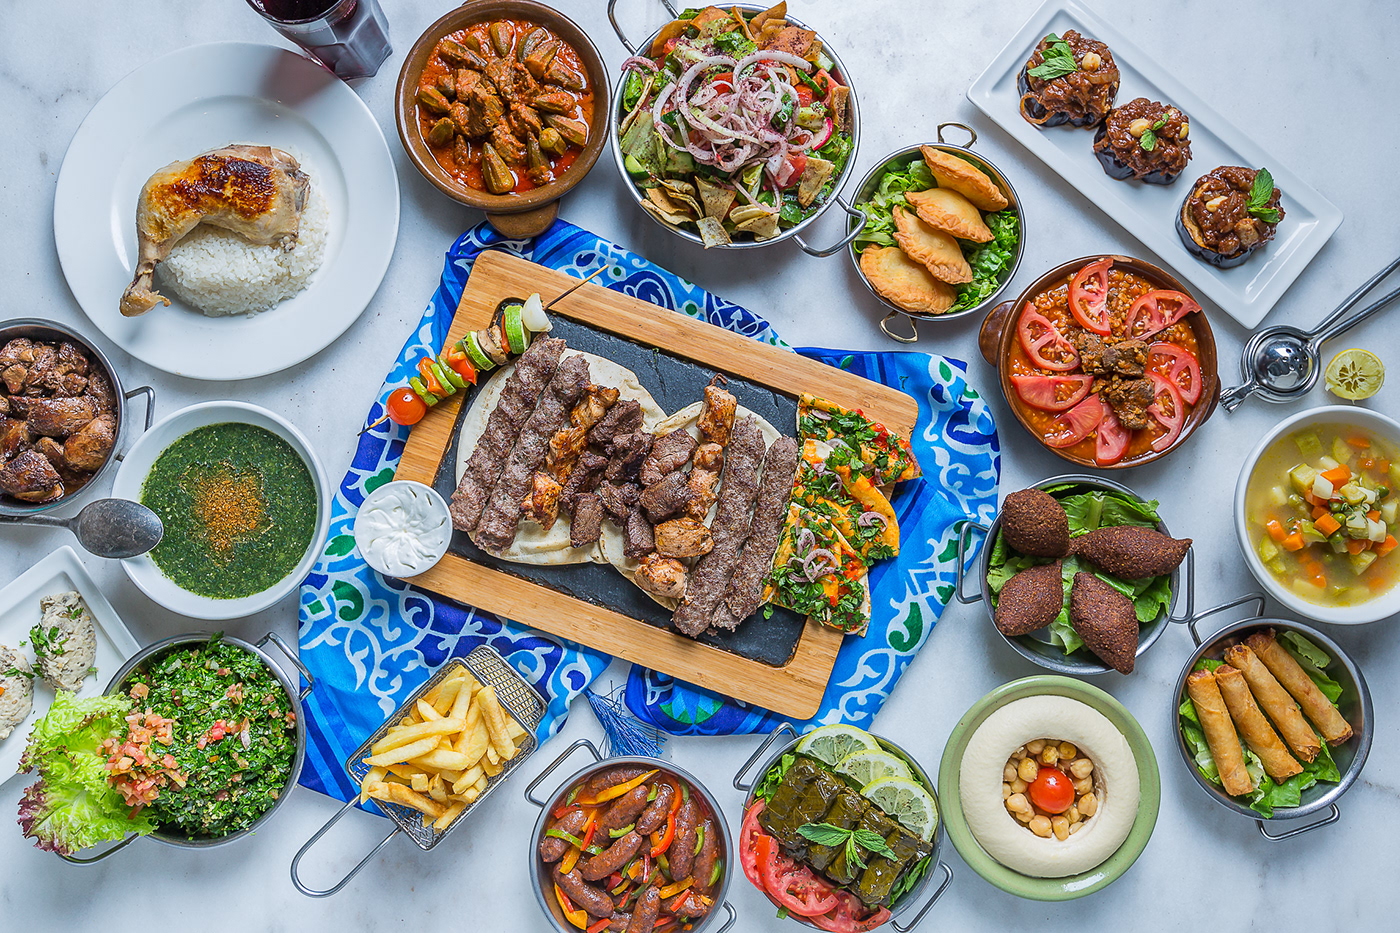 Beit El Ezz Ramadan Menu - Food commercial Photography on Behance